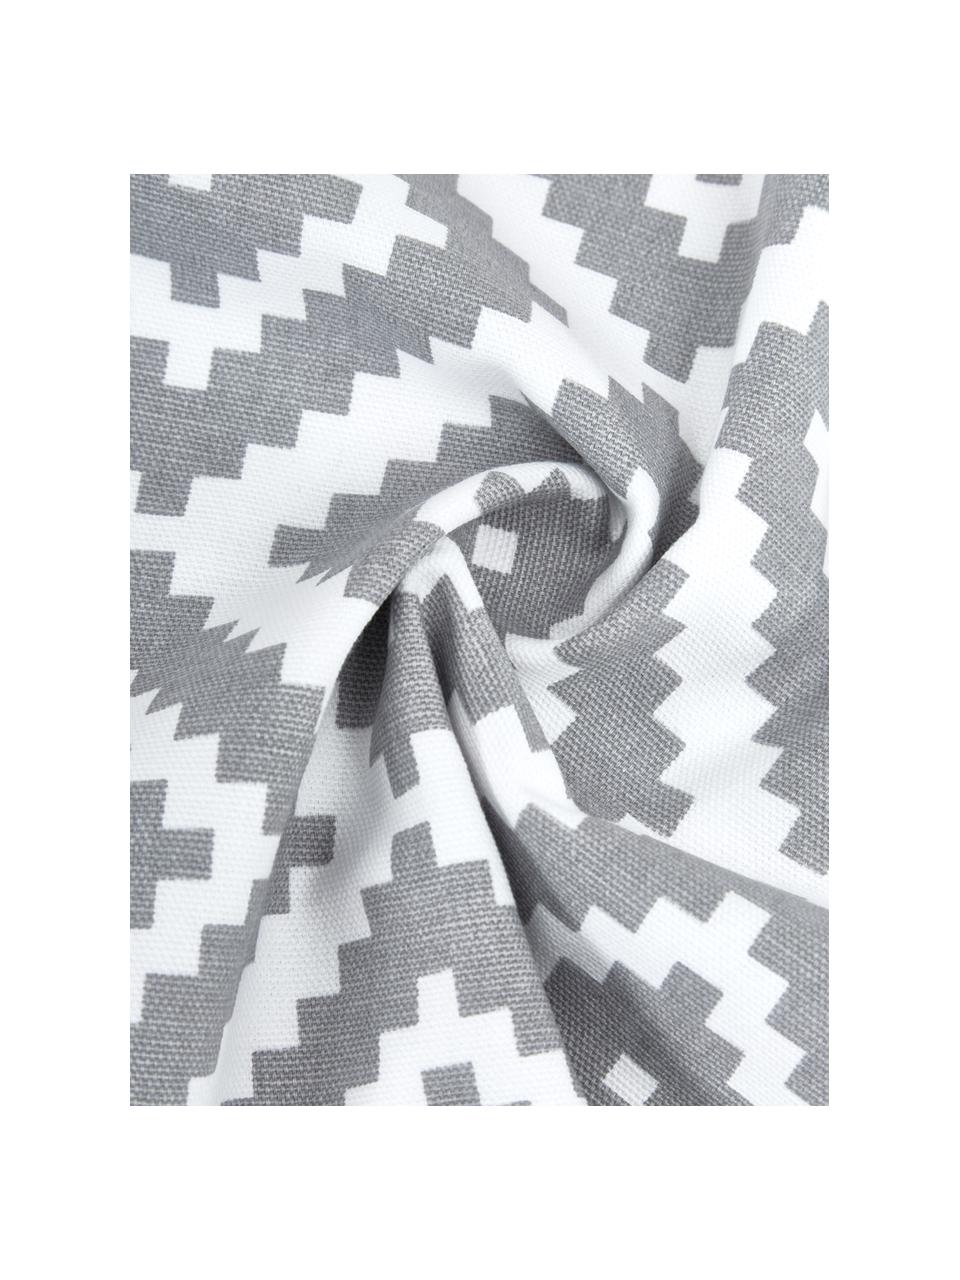 Kissenhülle Miami mit grafischem Muster, 100% Baumwolle, Grau, B 45 x L 45 cm